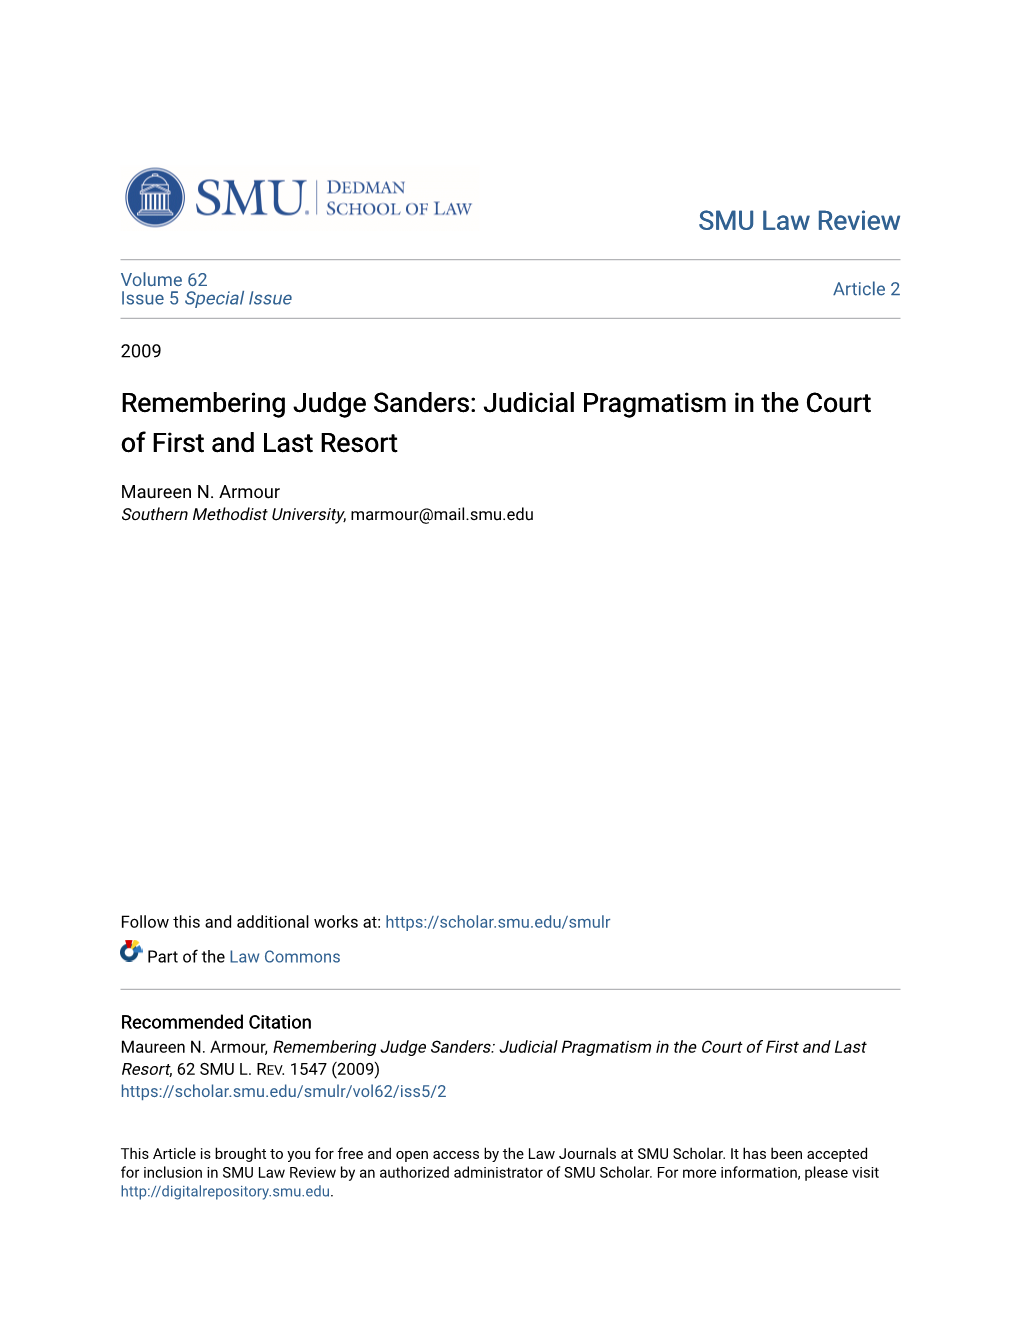 Remembering Judge Sanders: Judicial Pragmatism in the Court of First and Last Resort